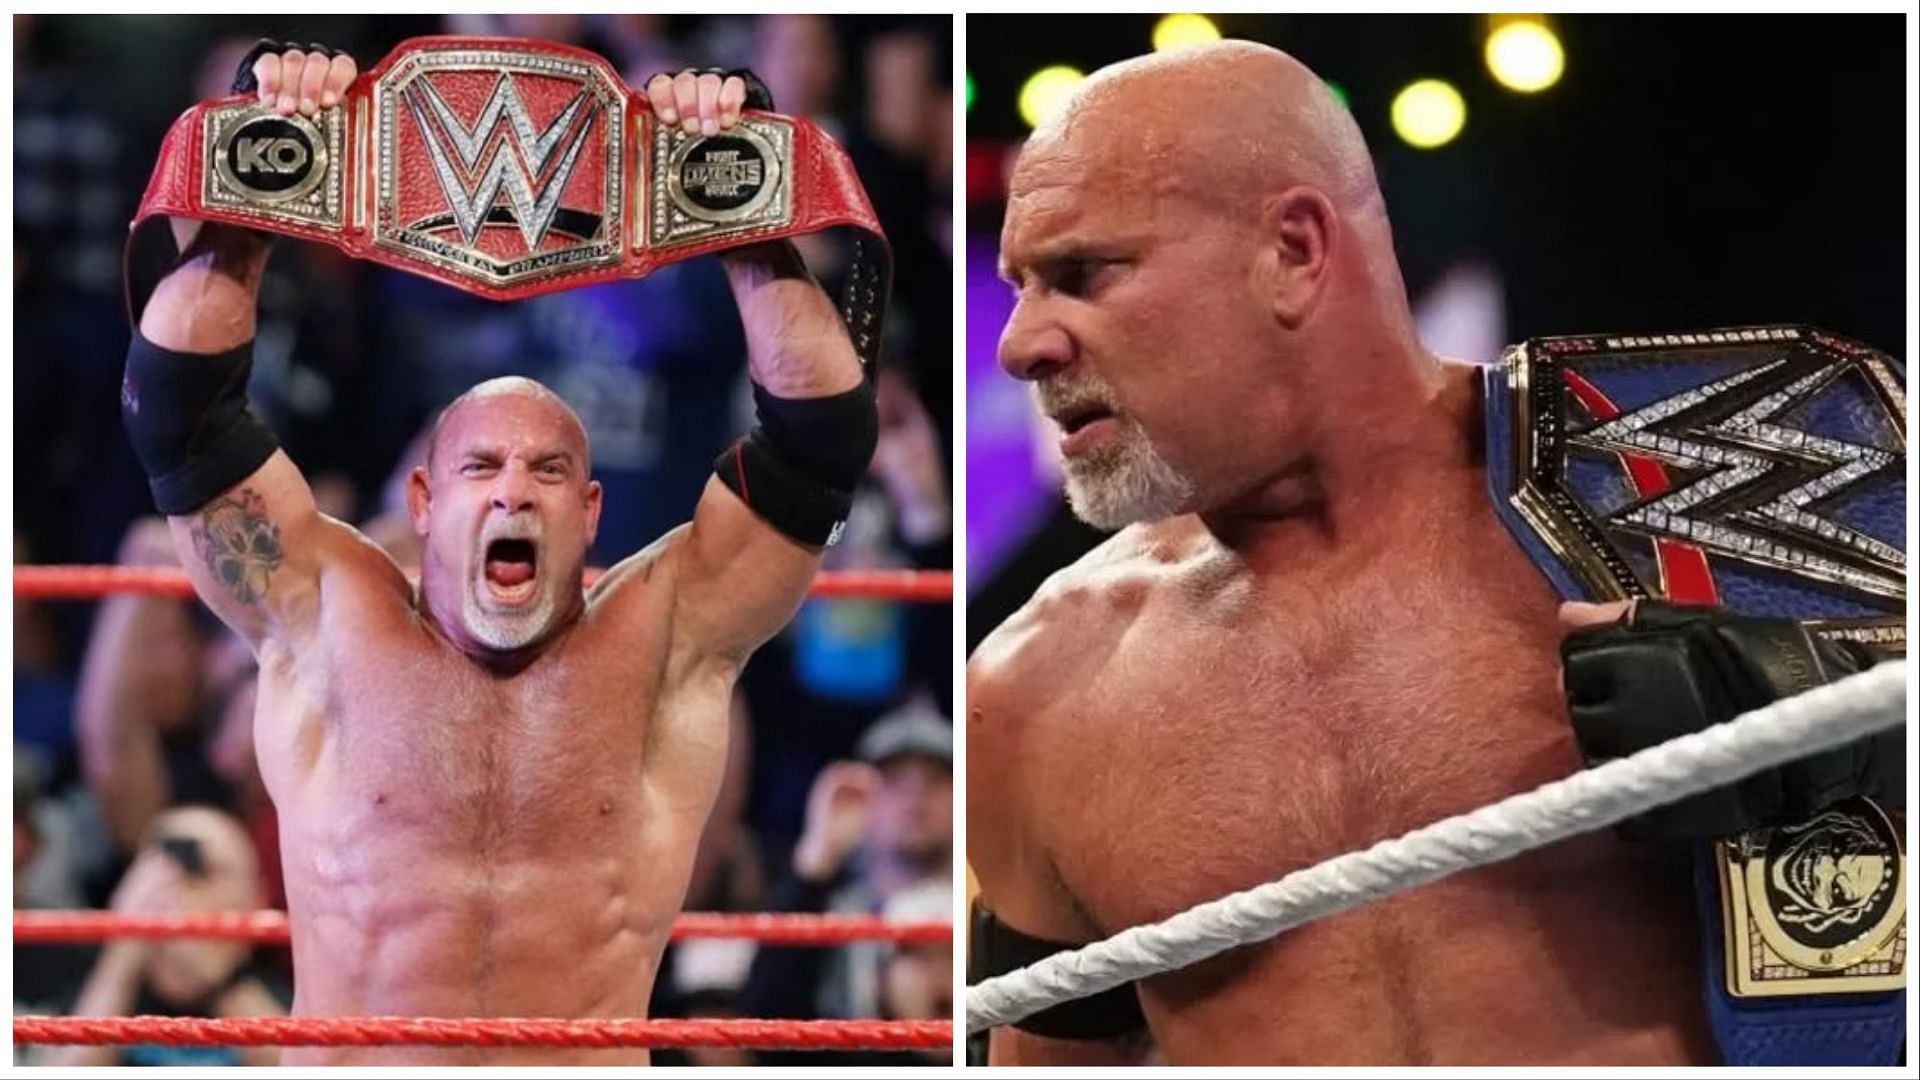 Goldberg won the WWE Universal Championship in 2017 and 2020